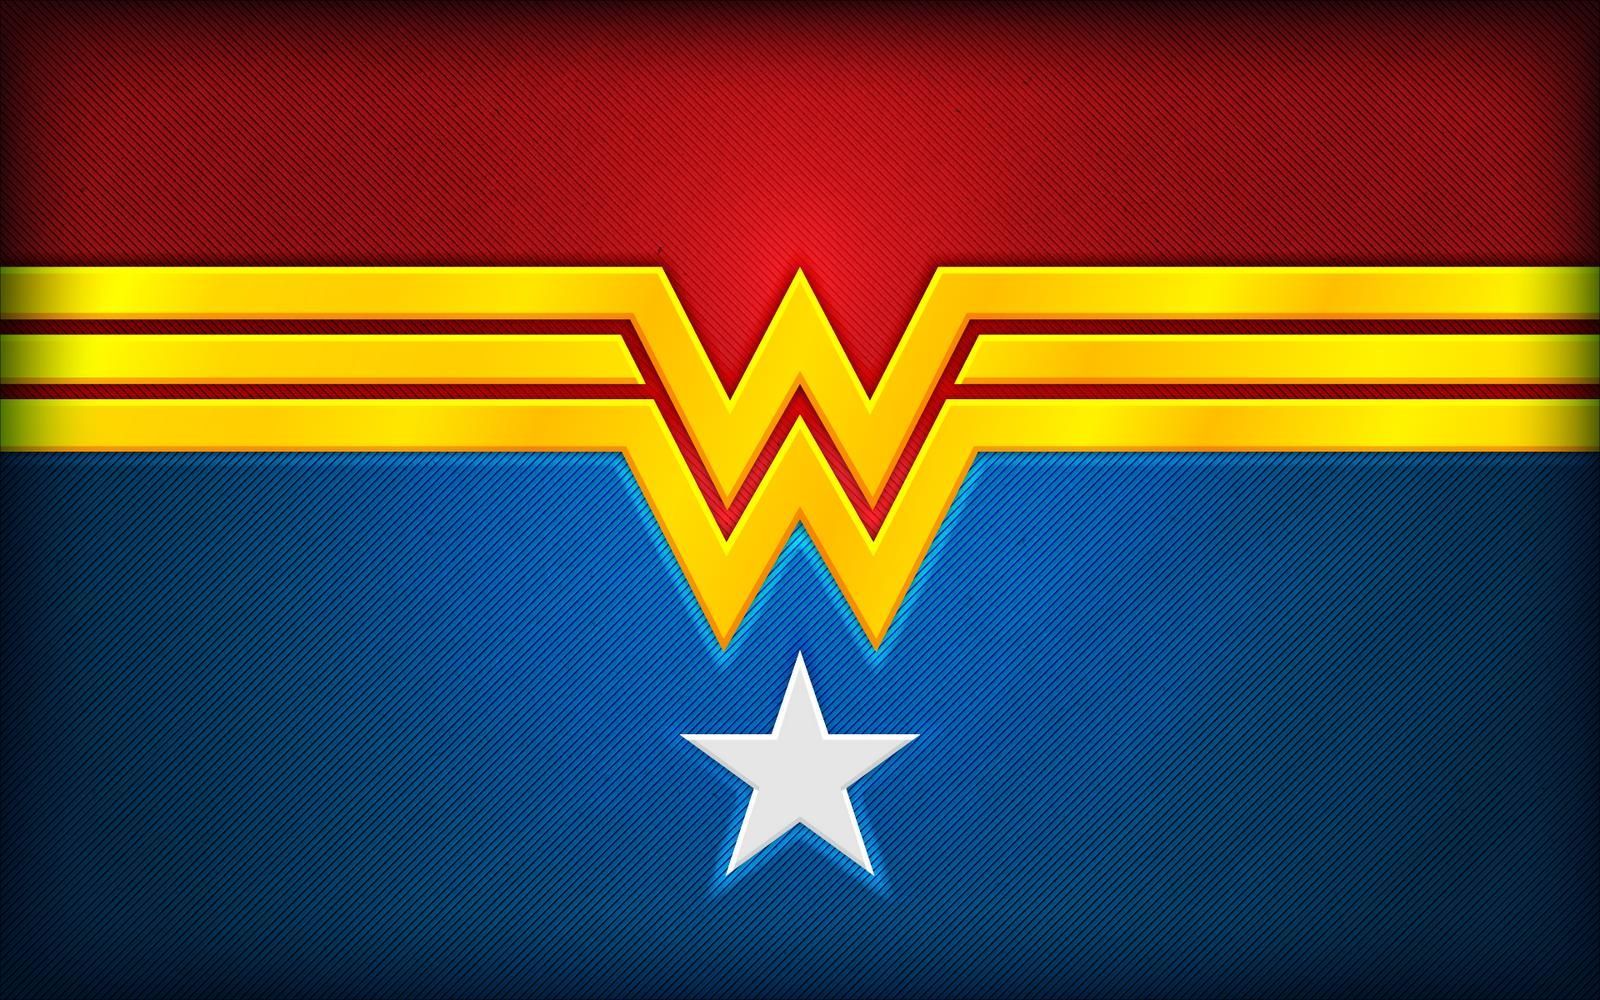 Wonder Woman Logo Wallpaper. Wonder woman fan art, Wonder woman logo, Wonder woman birthday